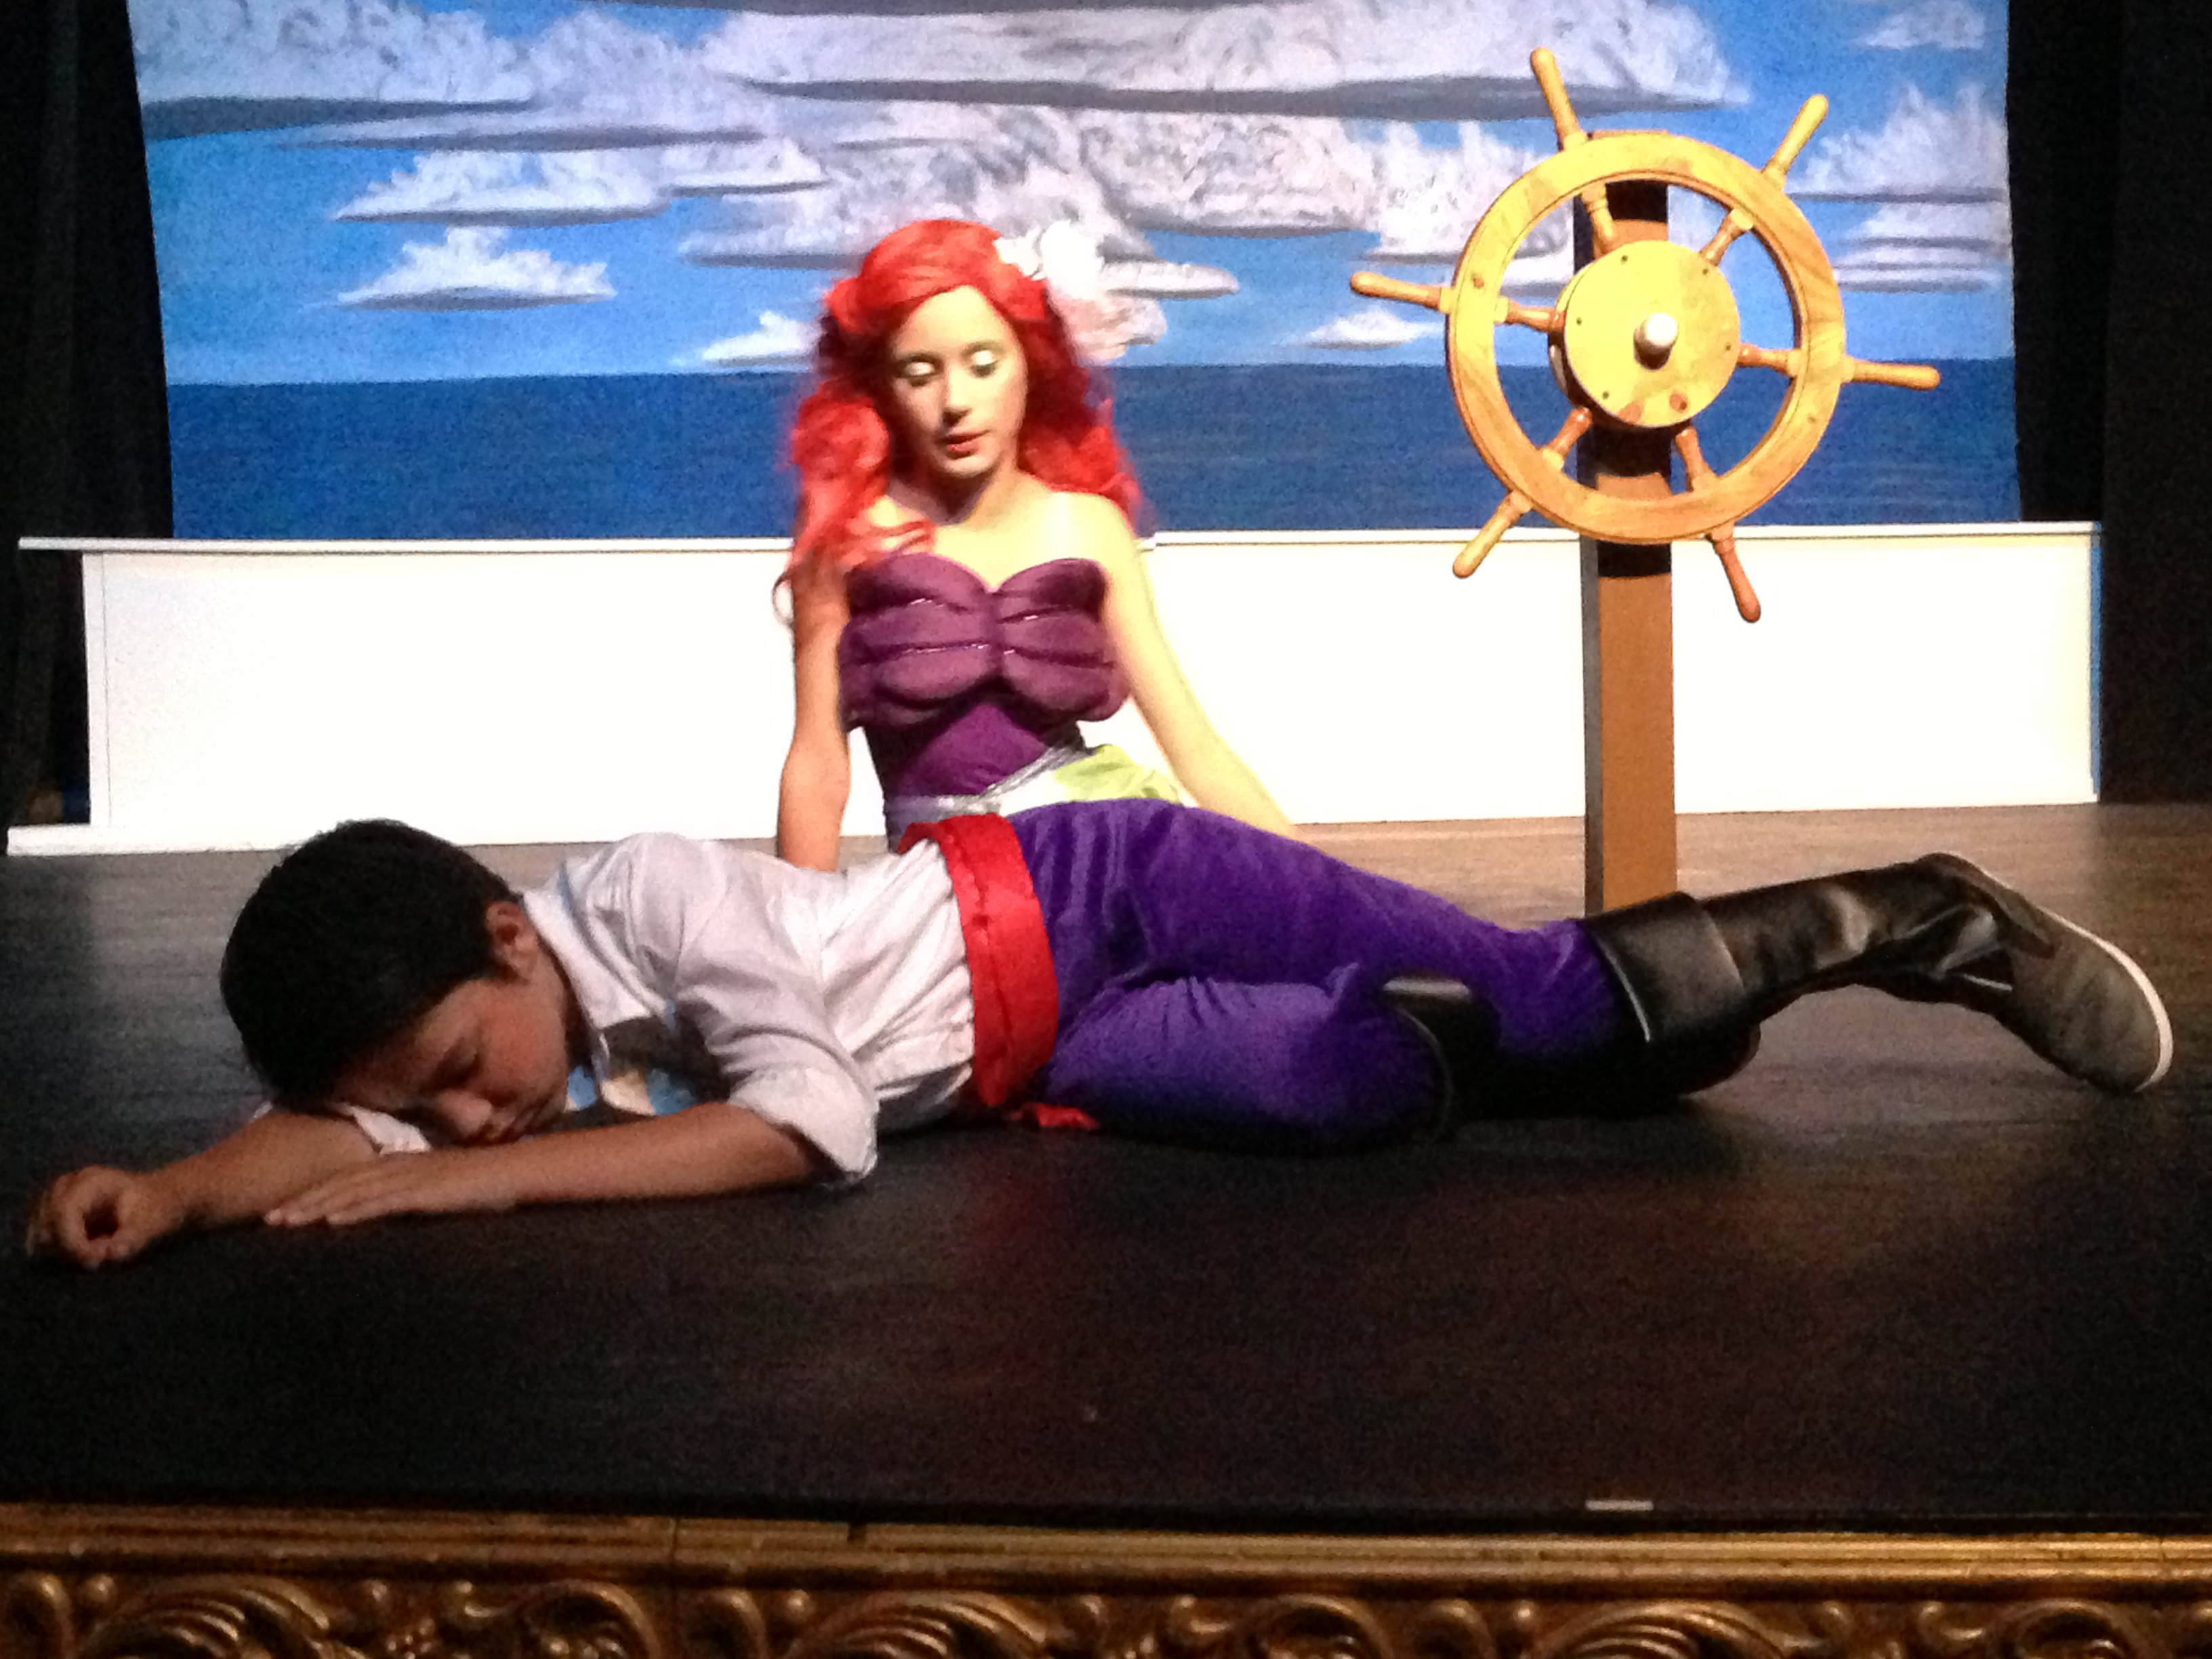 Jaden has Prince Eric in the Little Mermaid